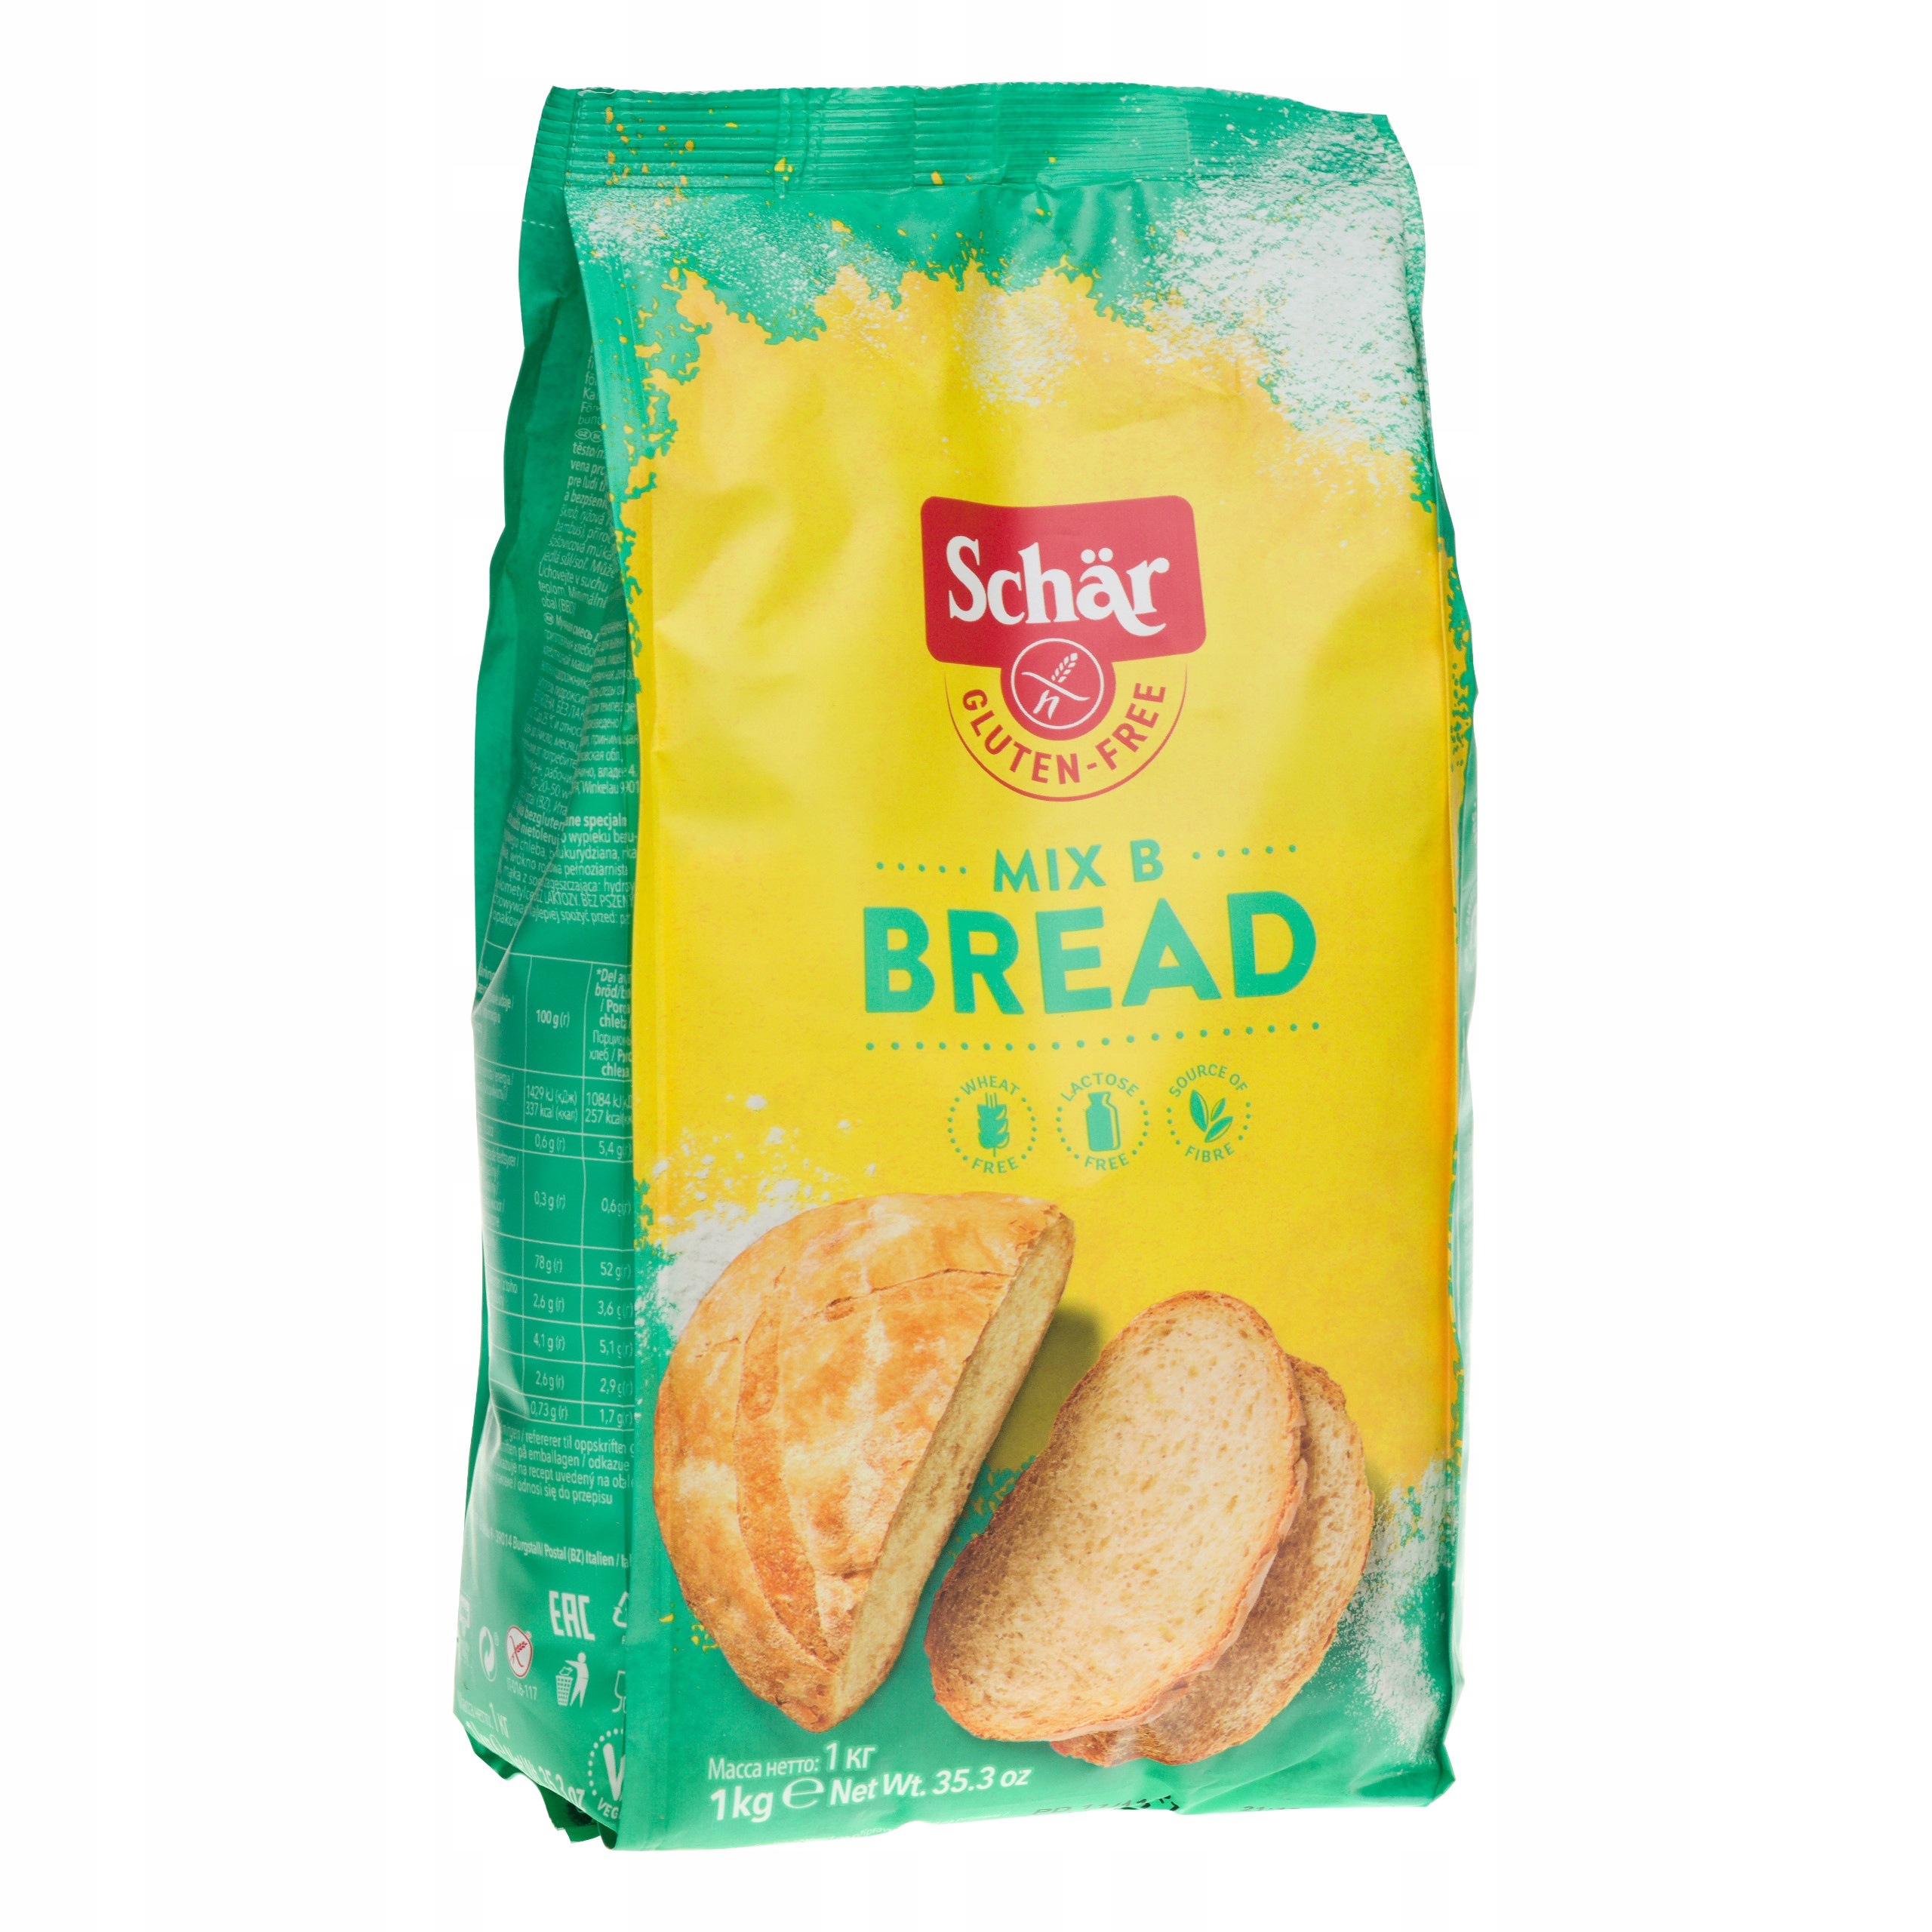 Bezglutenowa Schar B Bread mix - Allegro.pl